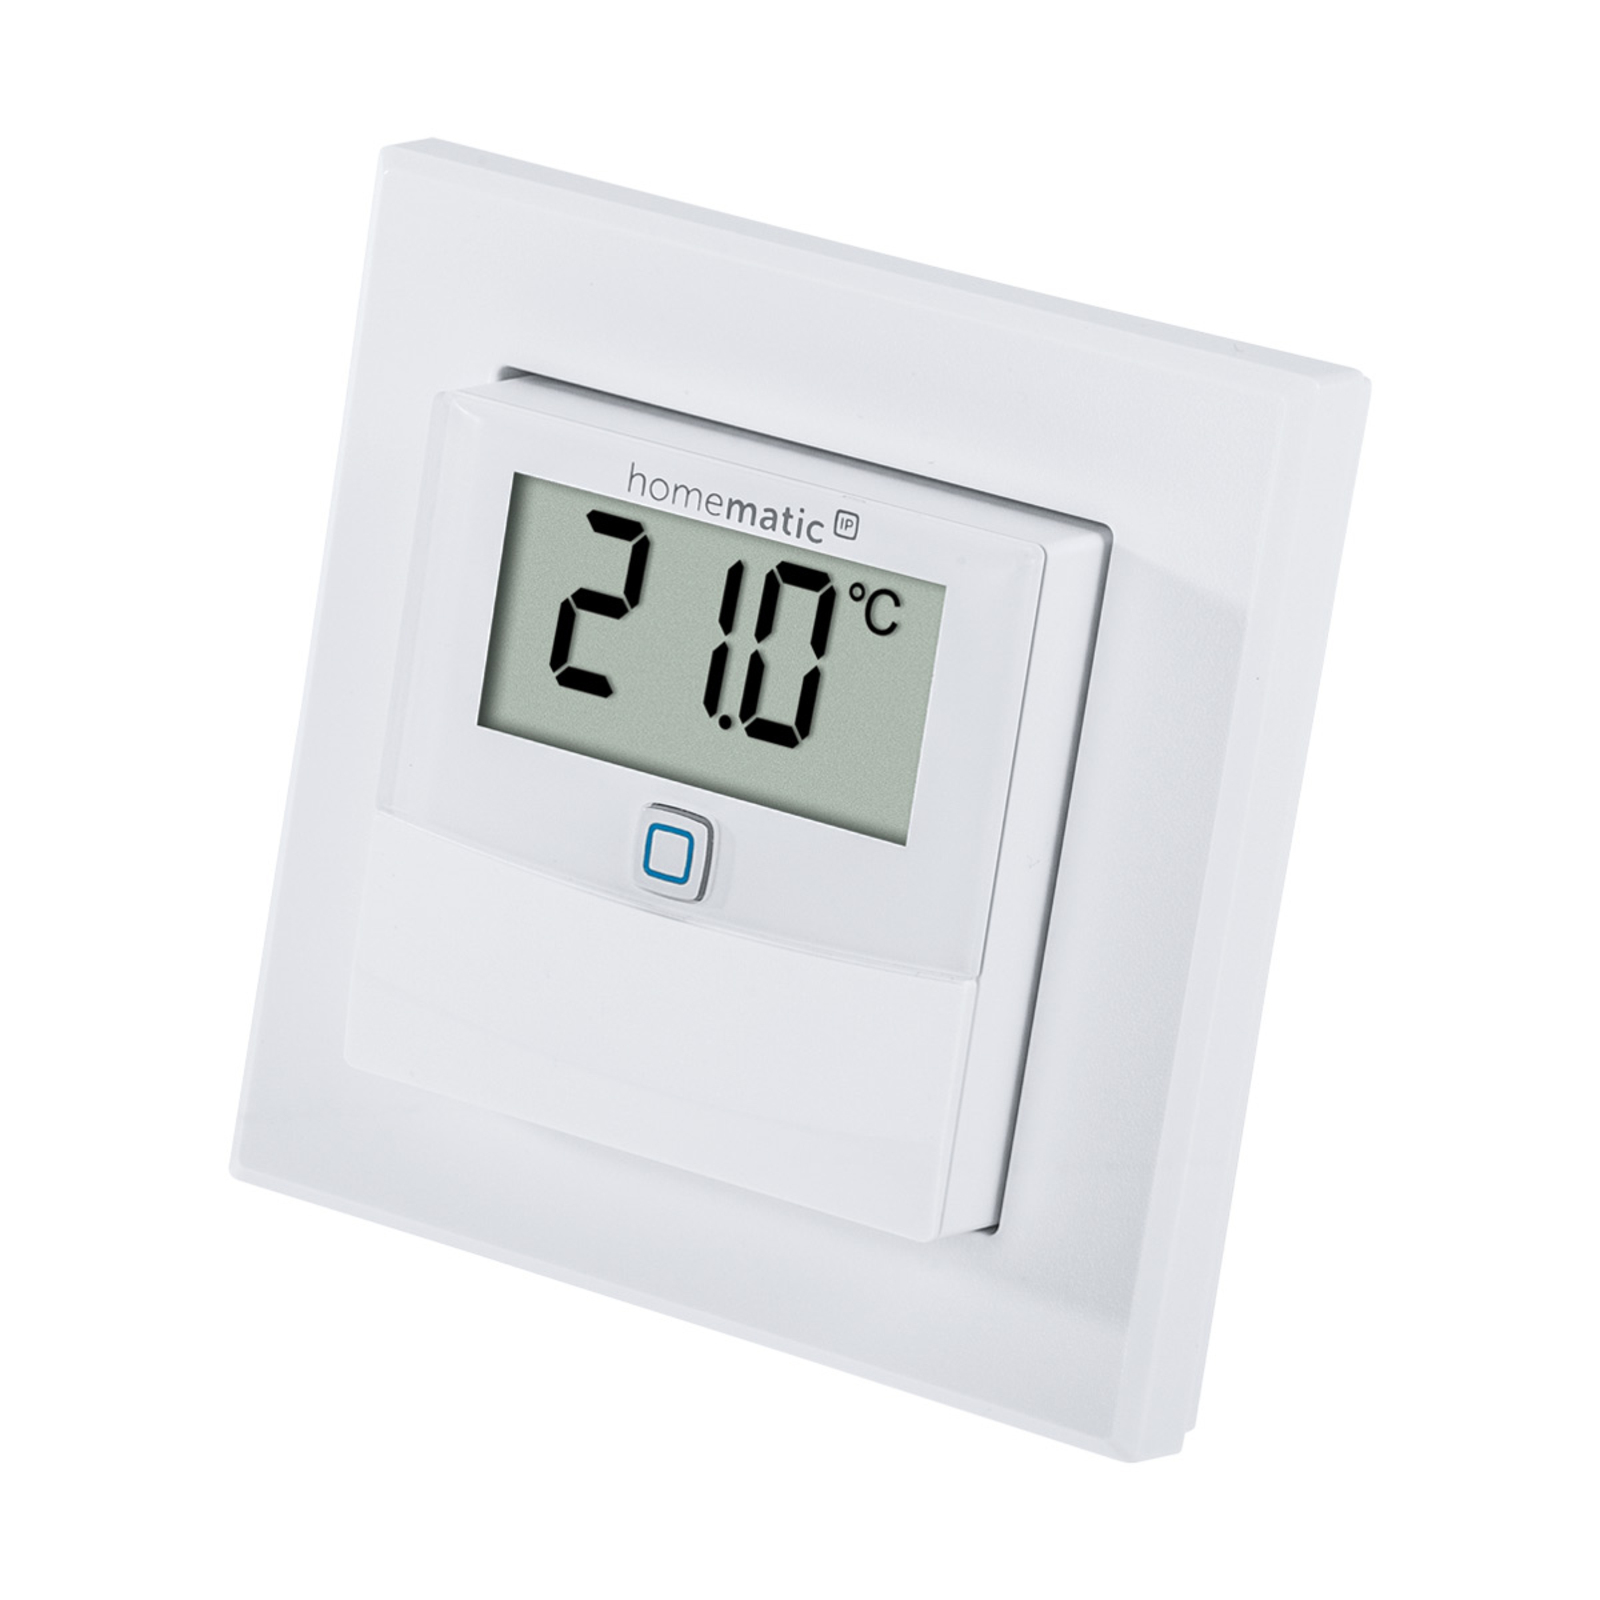 Homematic IP temperature/humidity sensor display